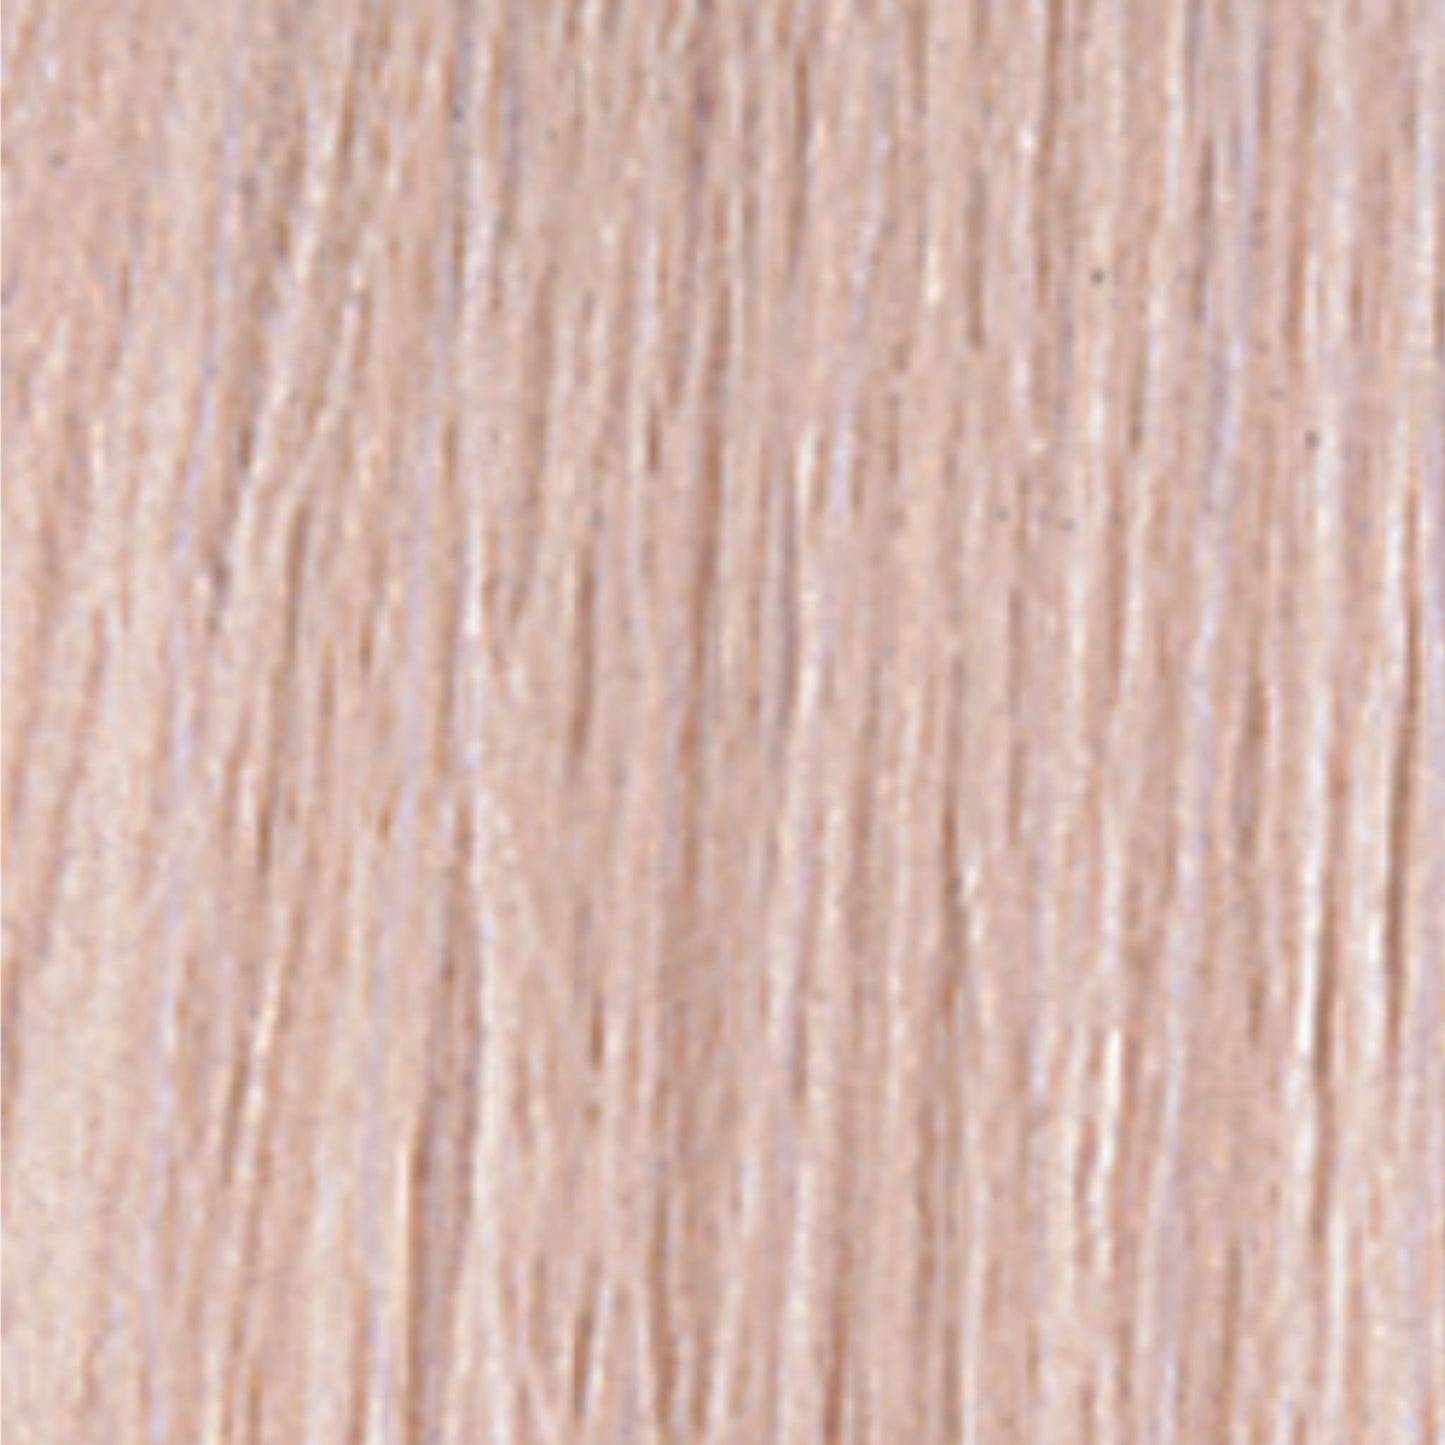 Wella Colour Charm T15 Pale Beige Blonde Toner Swatch Australia